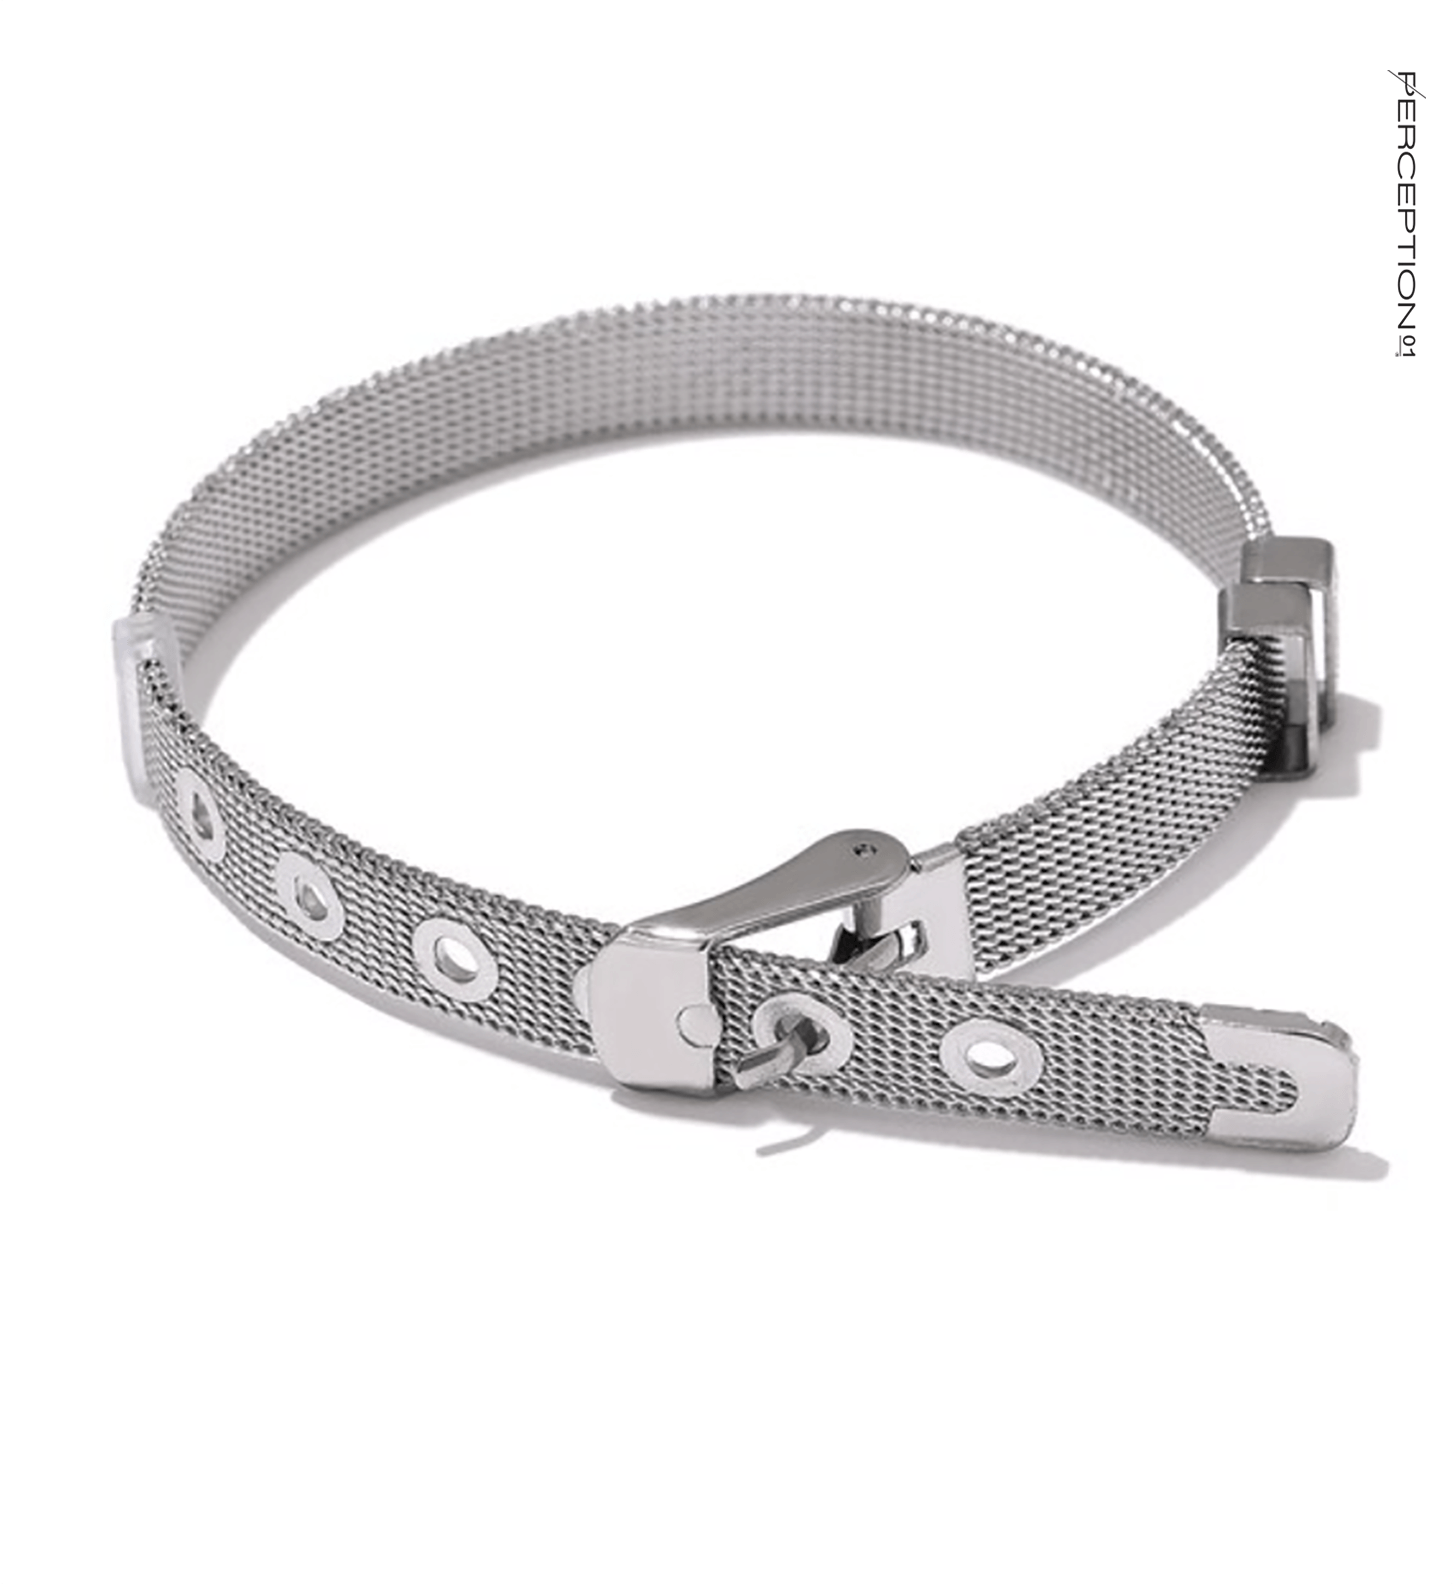 Silver Belt Style Bracelet ~ Charm your life - Perception0one.com